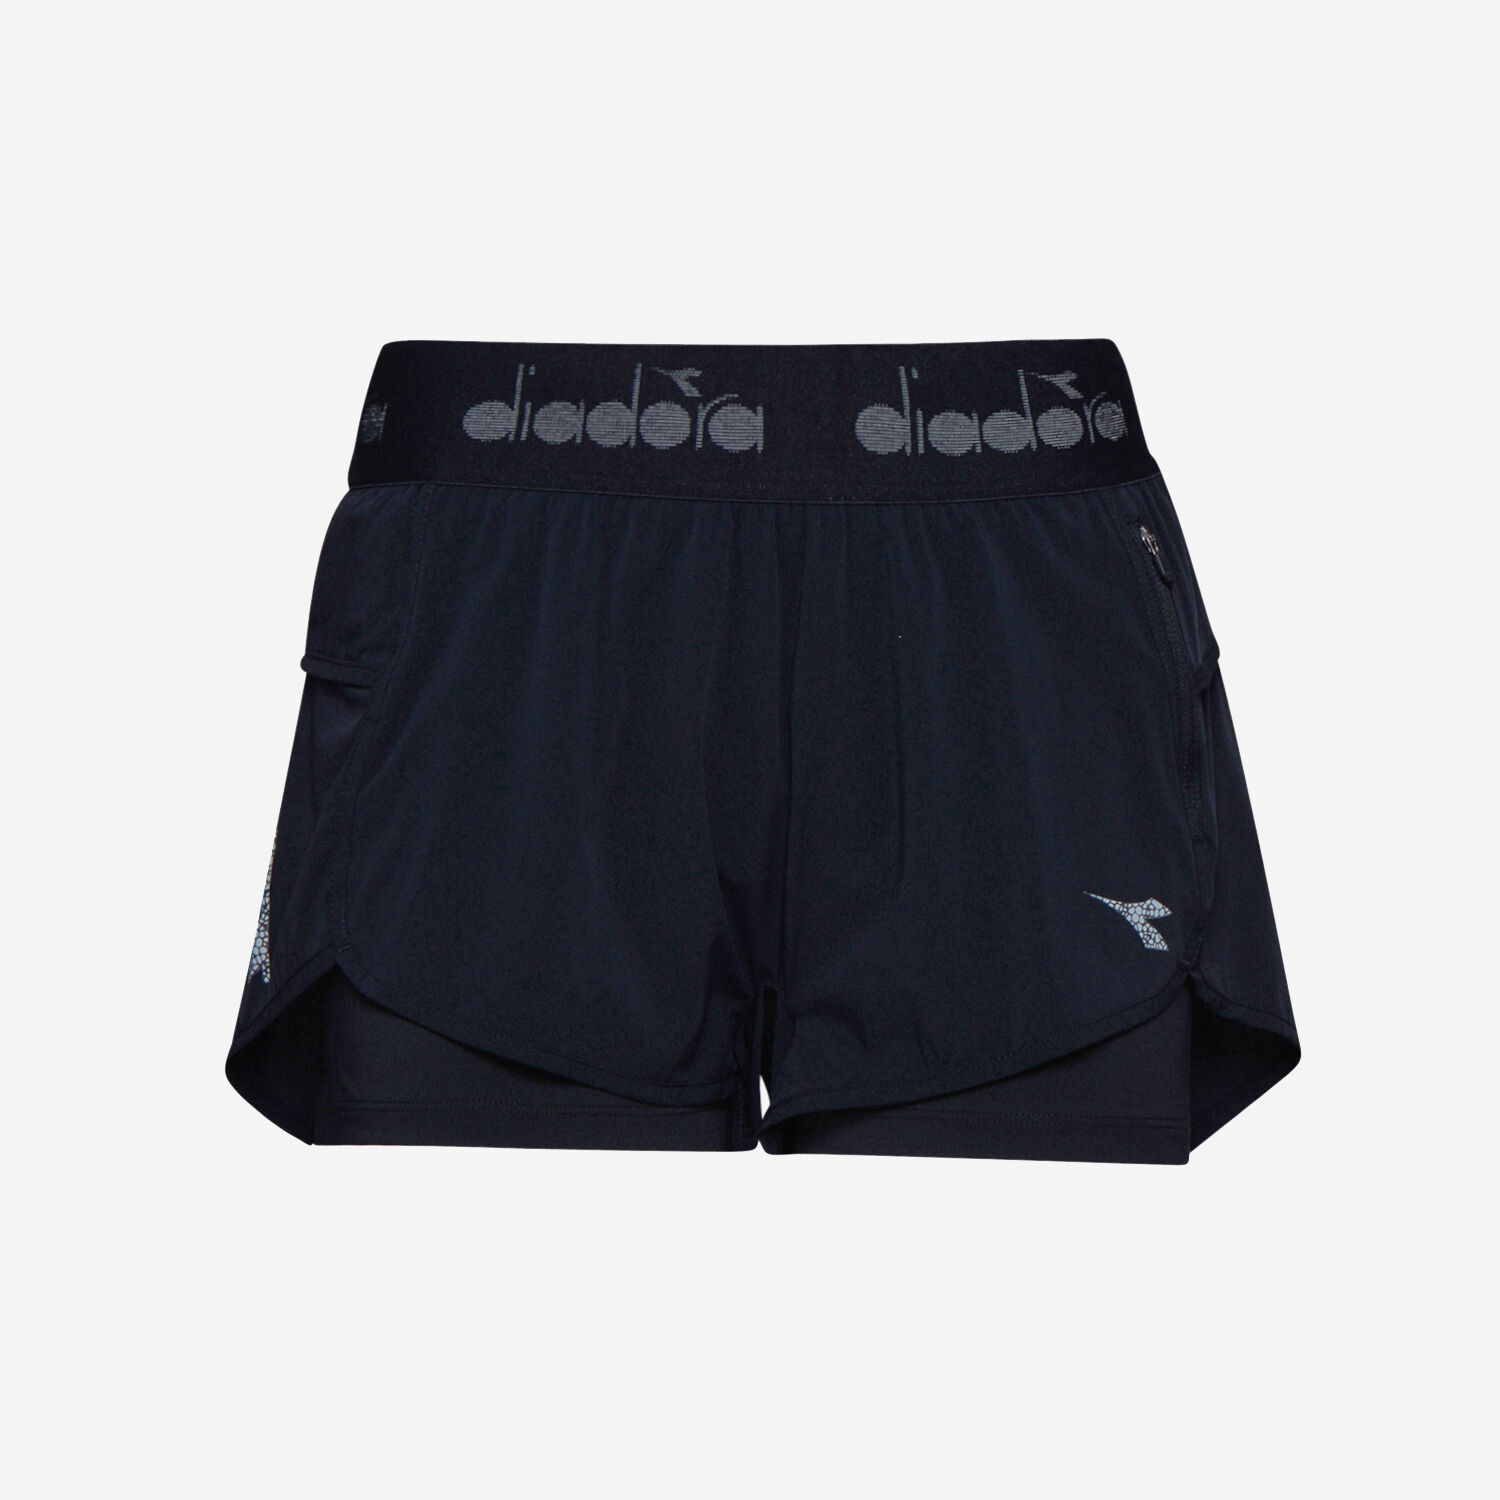 Diadora L. Double Layer W shorts RUNKD online running store